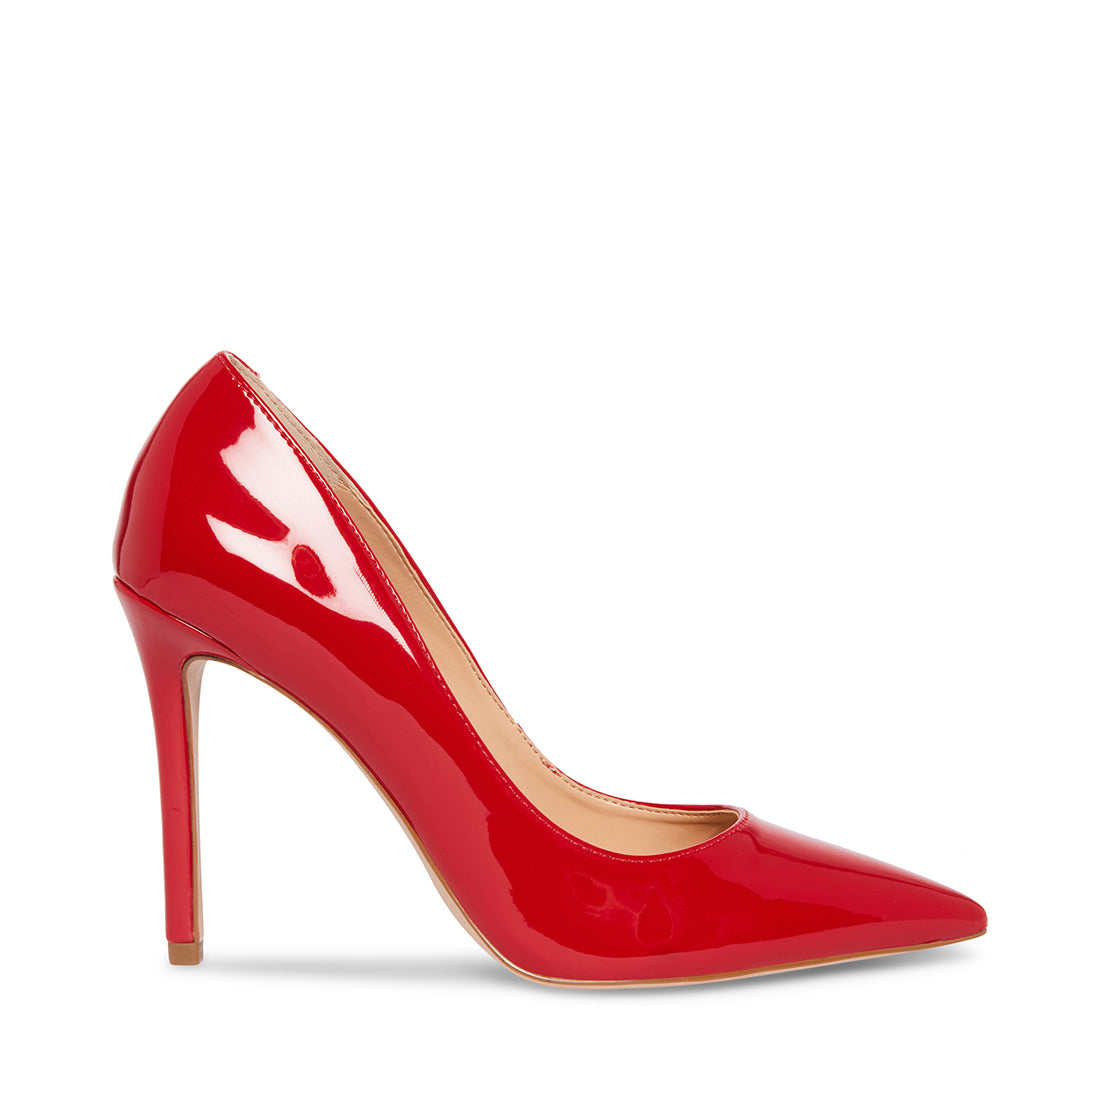 30 Sassy Red Heels Designs To Make A Fashion Statement | Red stiletto heels,  Stiletto heels, Red heels